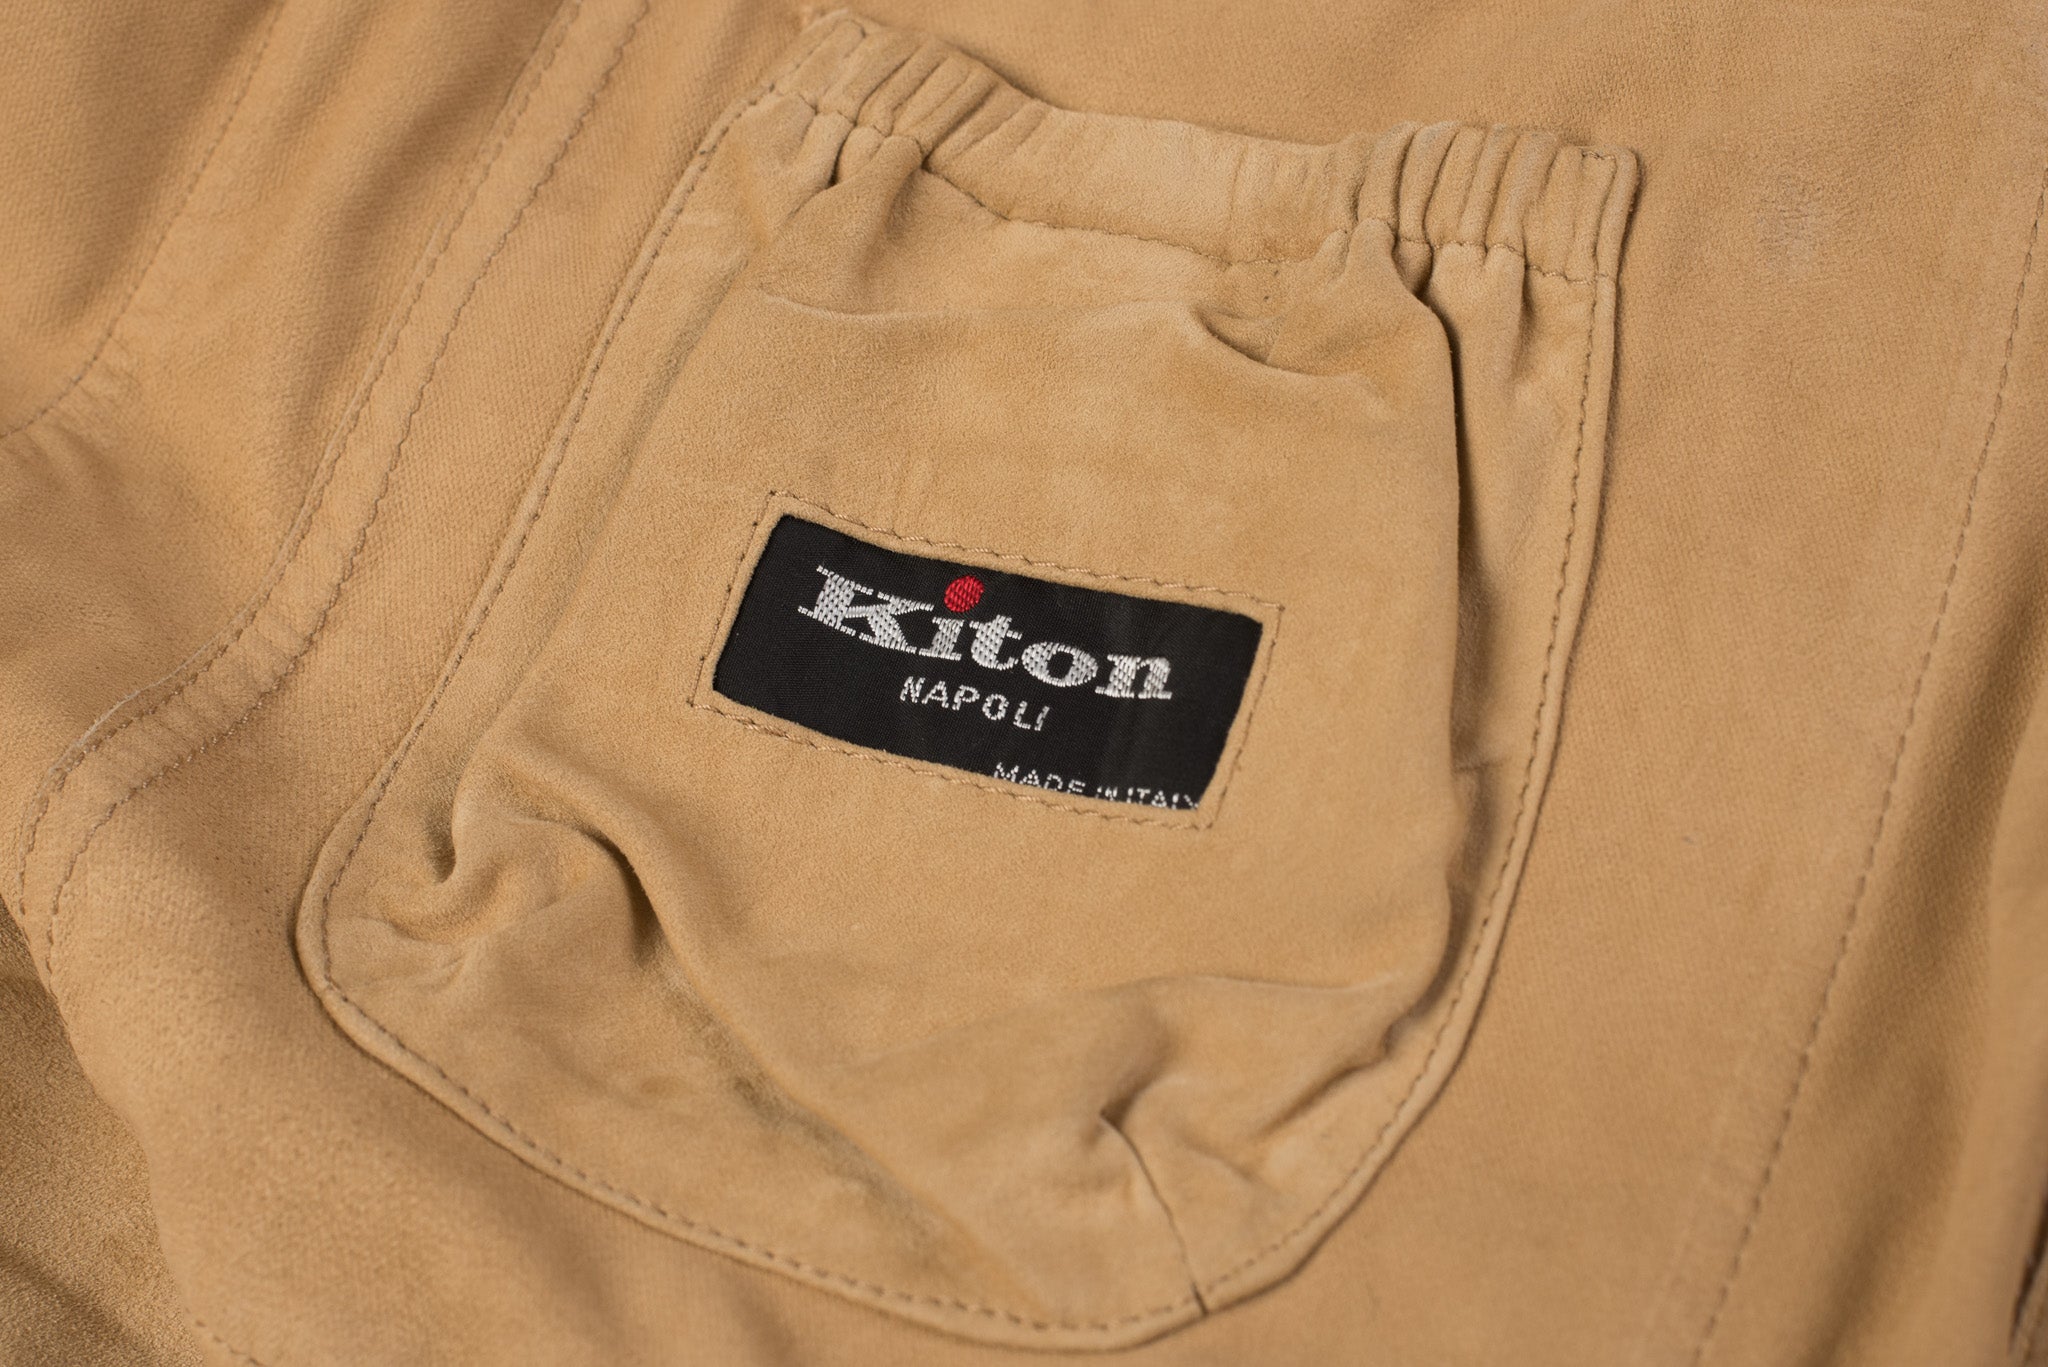 KITON Napoli Handmade Tan Suede Leather Unlined Jacket EU 50 US 40